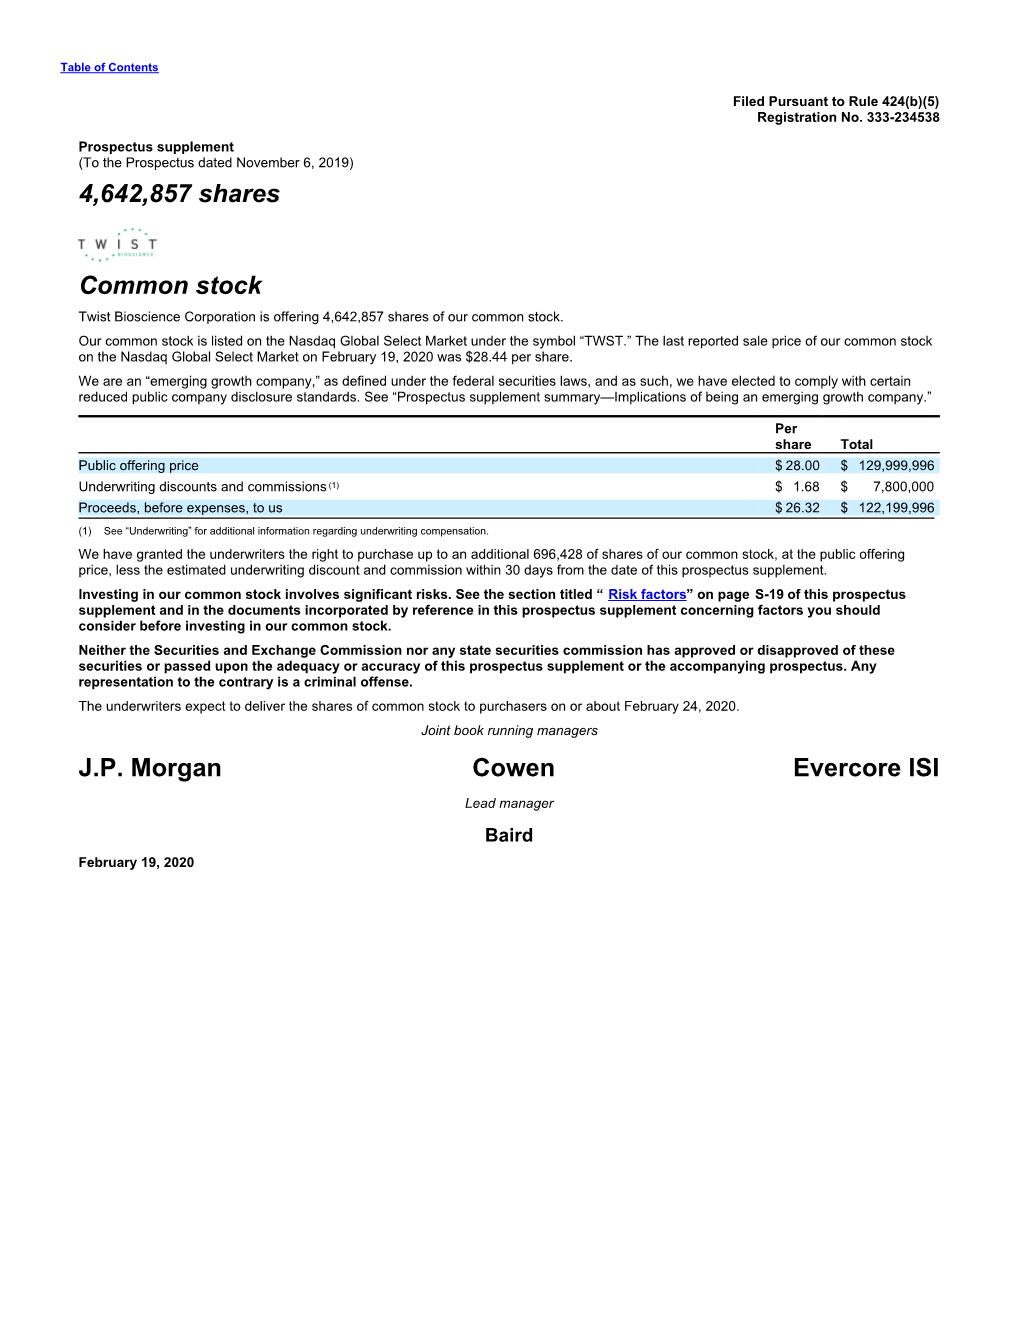 4,642,857 Shares Common Stock J.P. Morgan Cowen Evercore